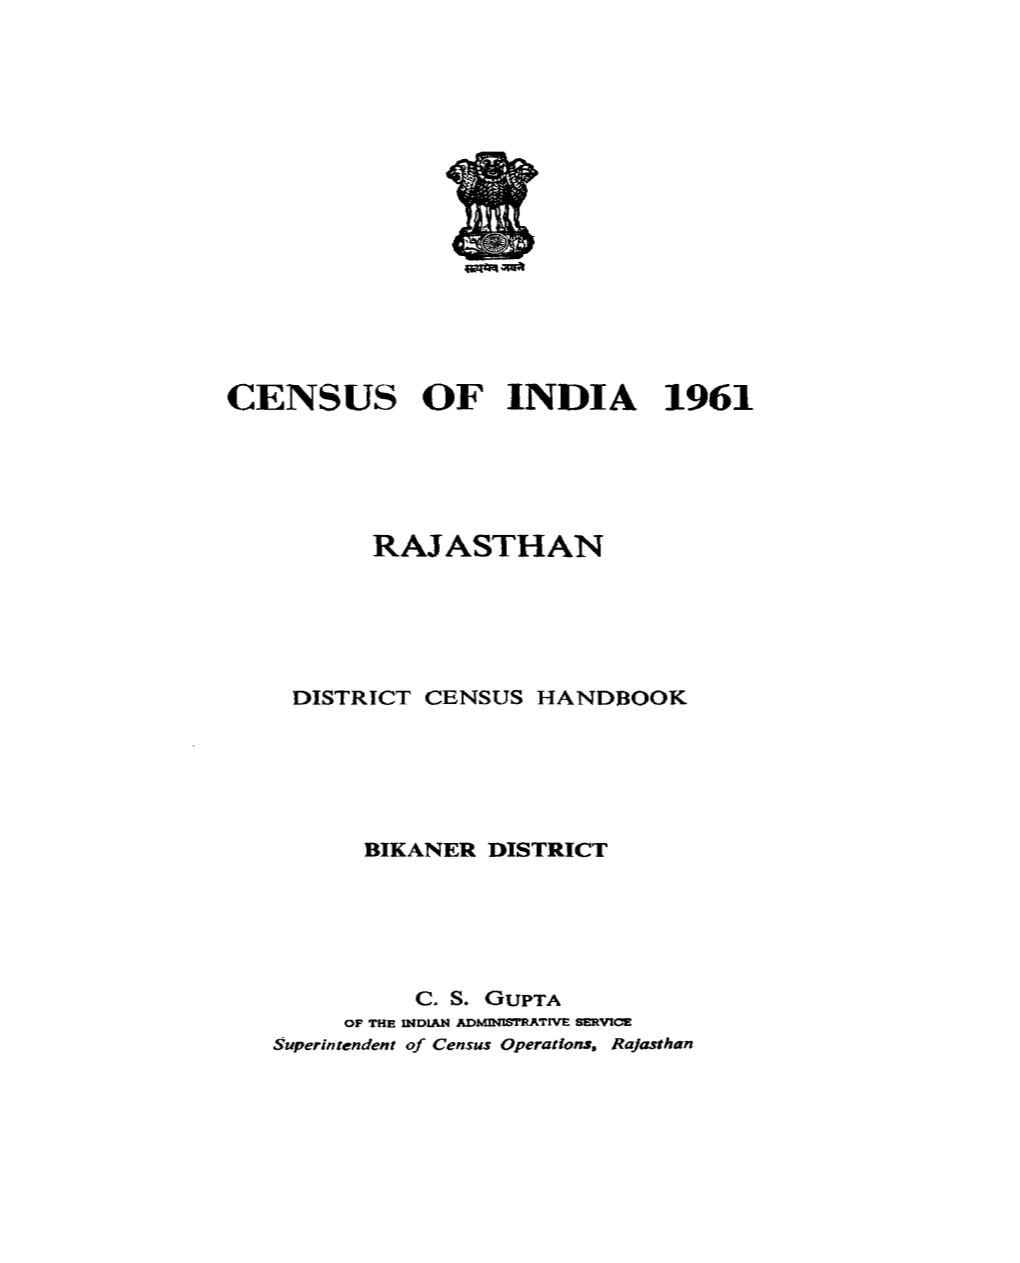 District Census Handbook, Bikaner, Rajasthan